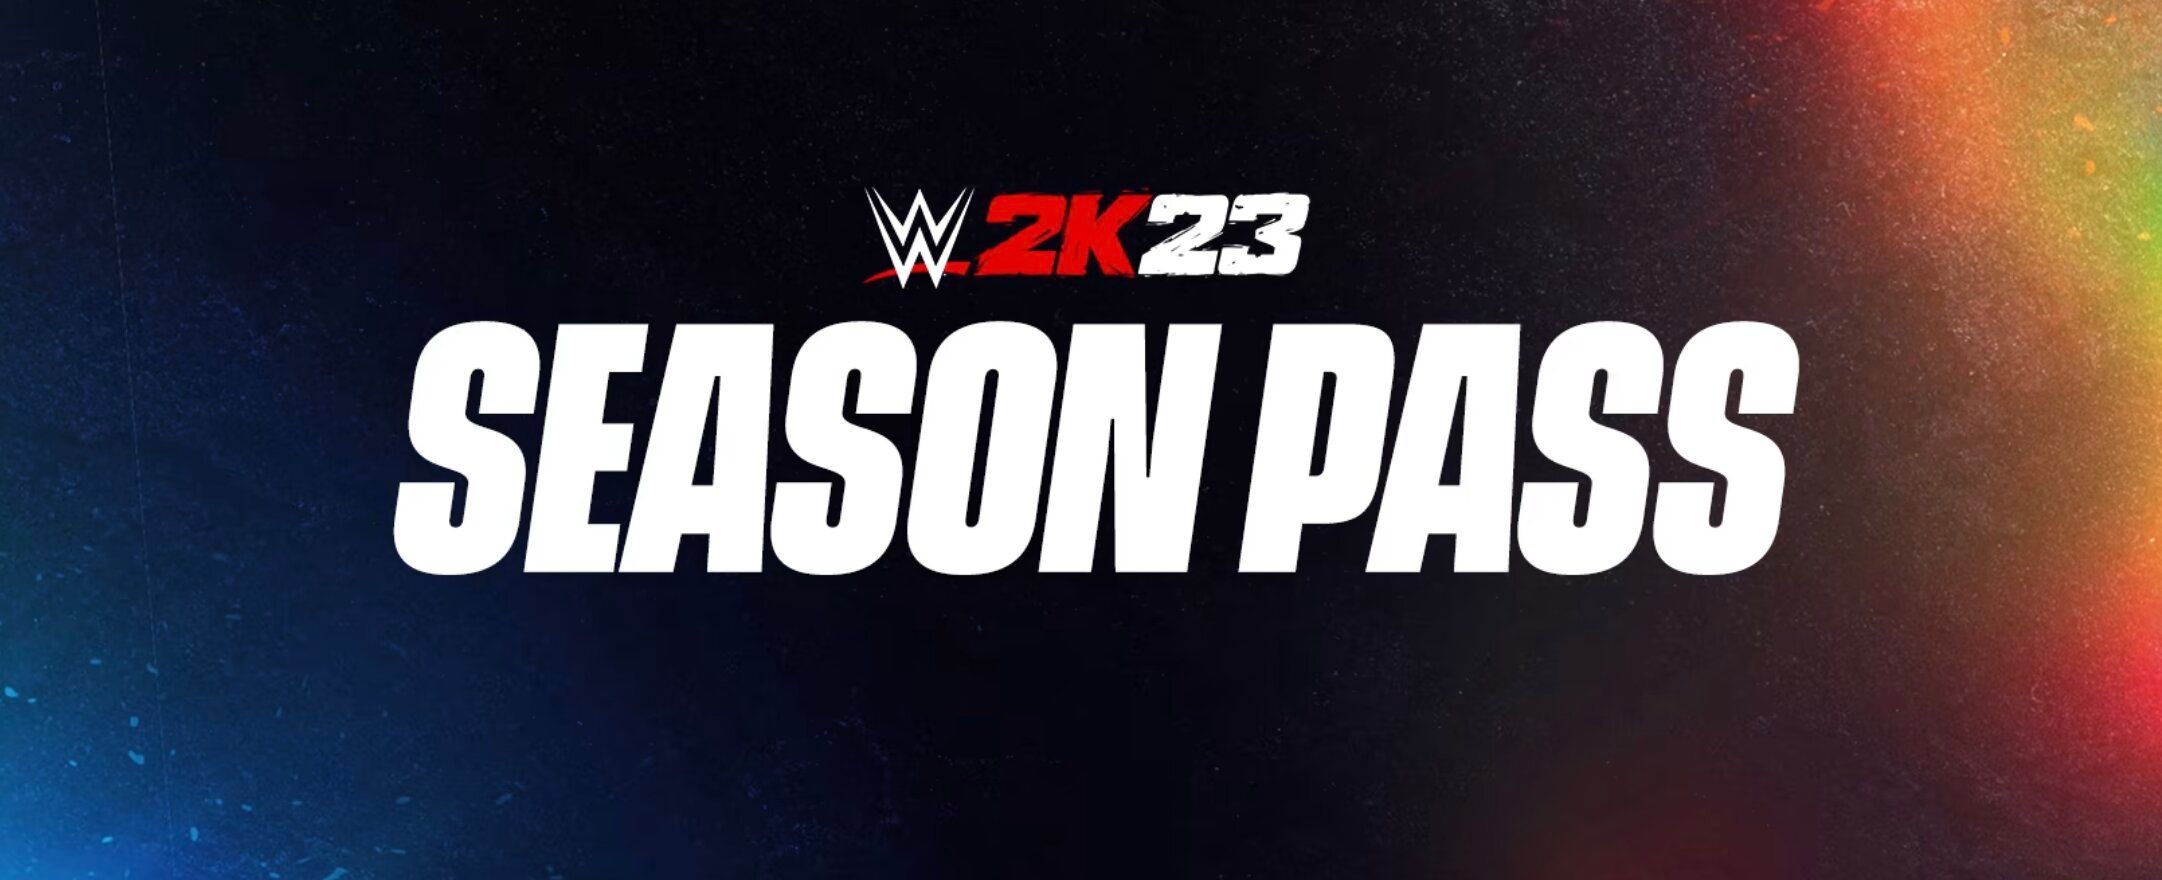 WWE 2K23 Season Pass promo